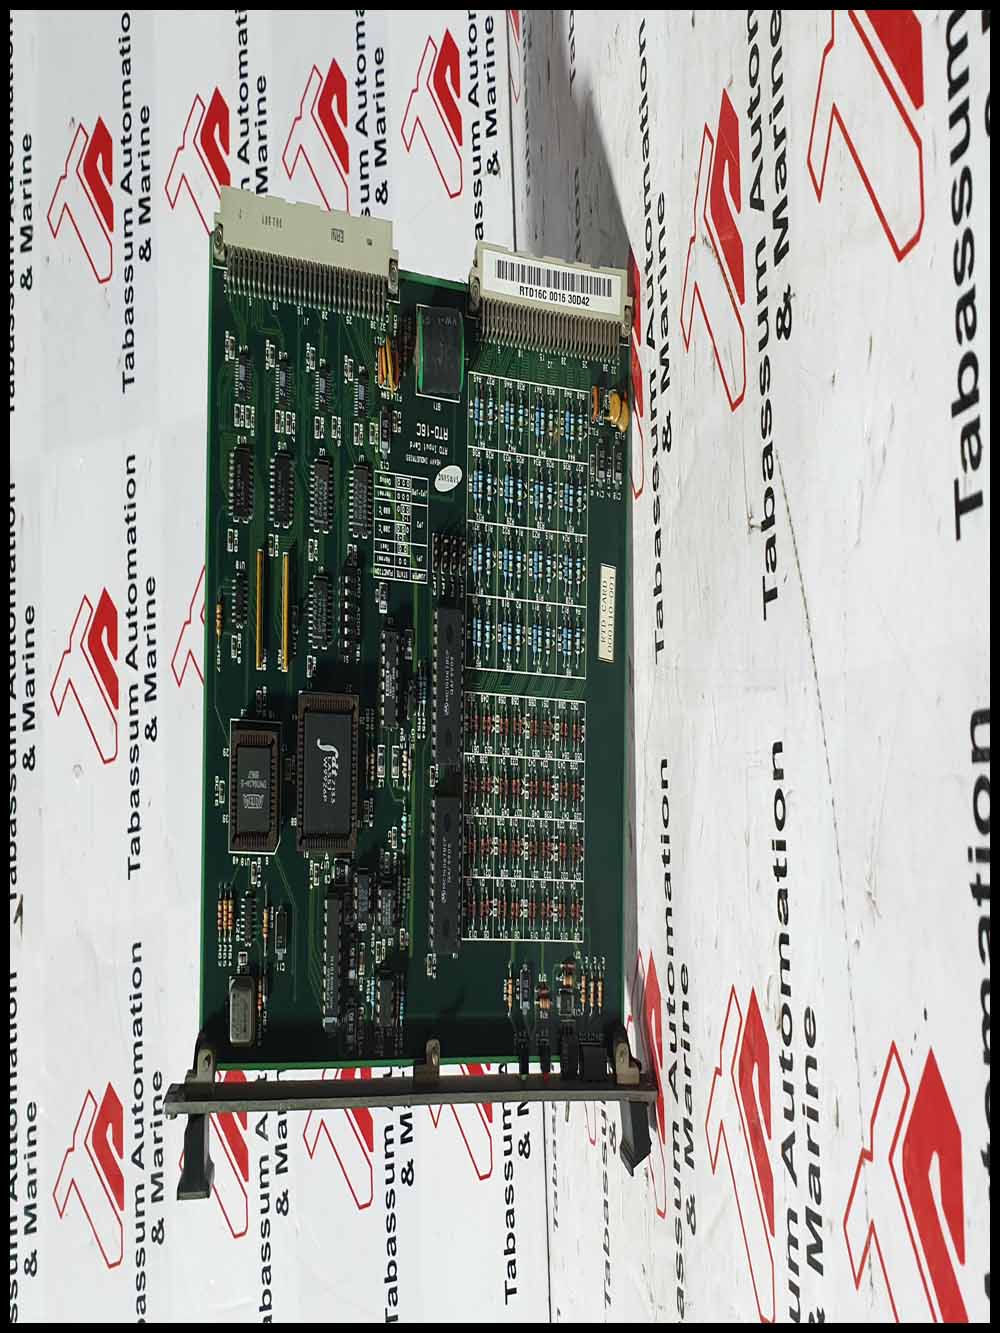 SAMSUNG RTD-6C RTD INPUT CARD PCB CARD